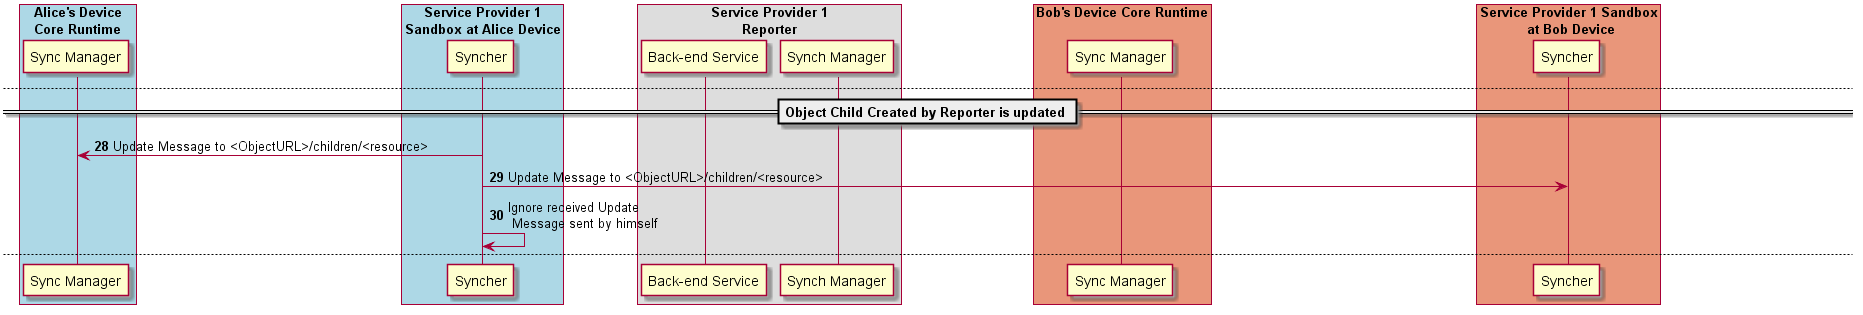 Figure @data-object-child-update-createdby-reporter Data Object Child update that was created by Data Object Parent Reporter